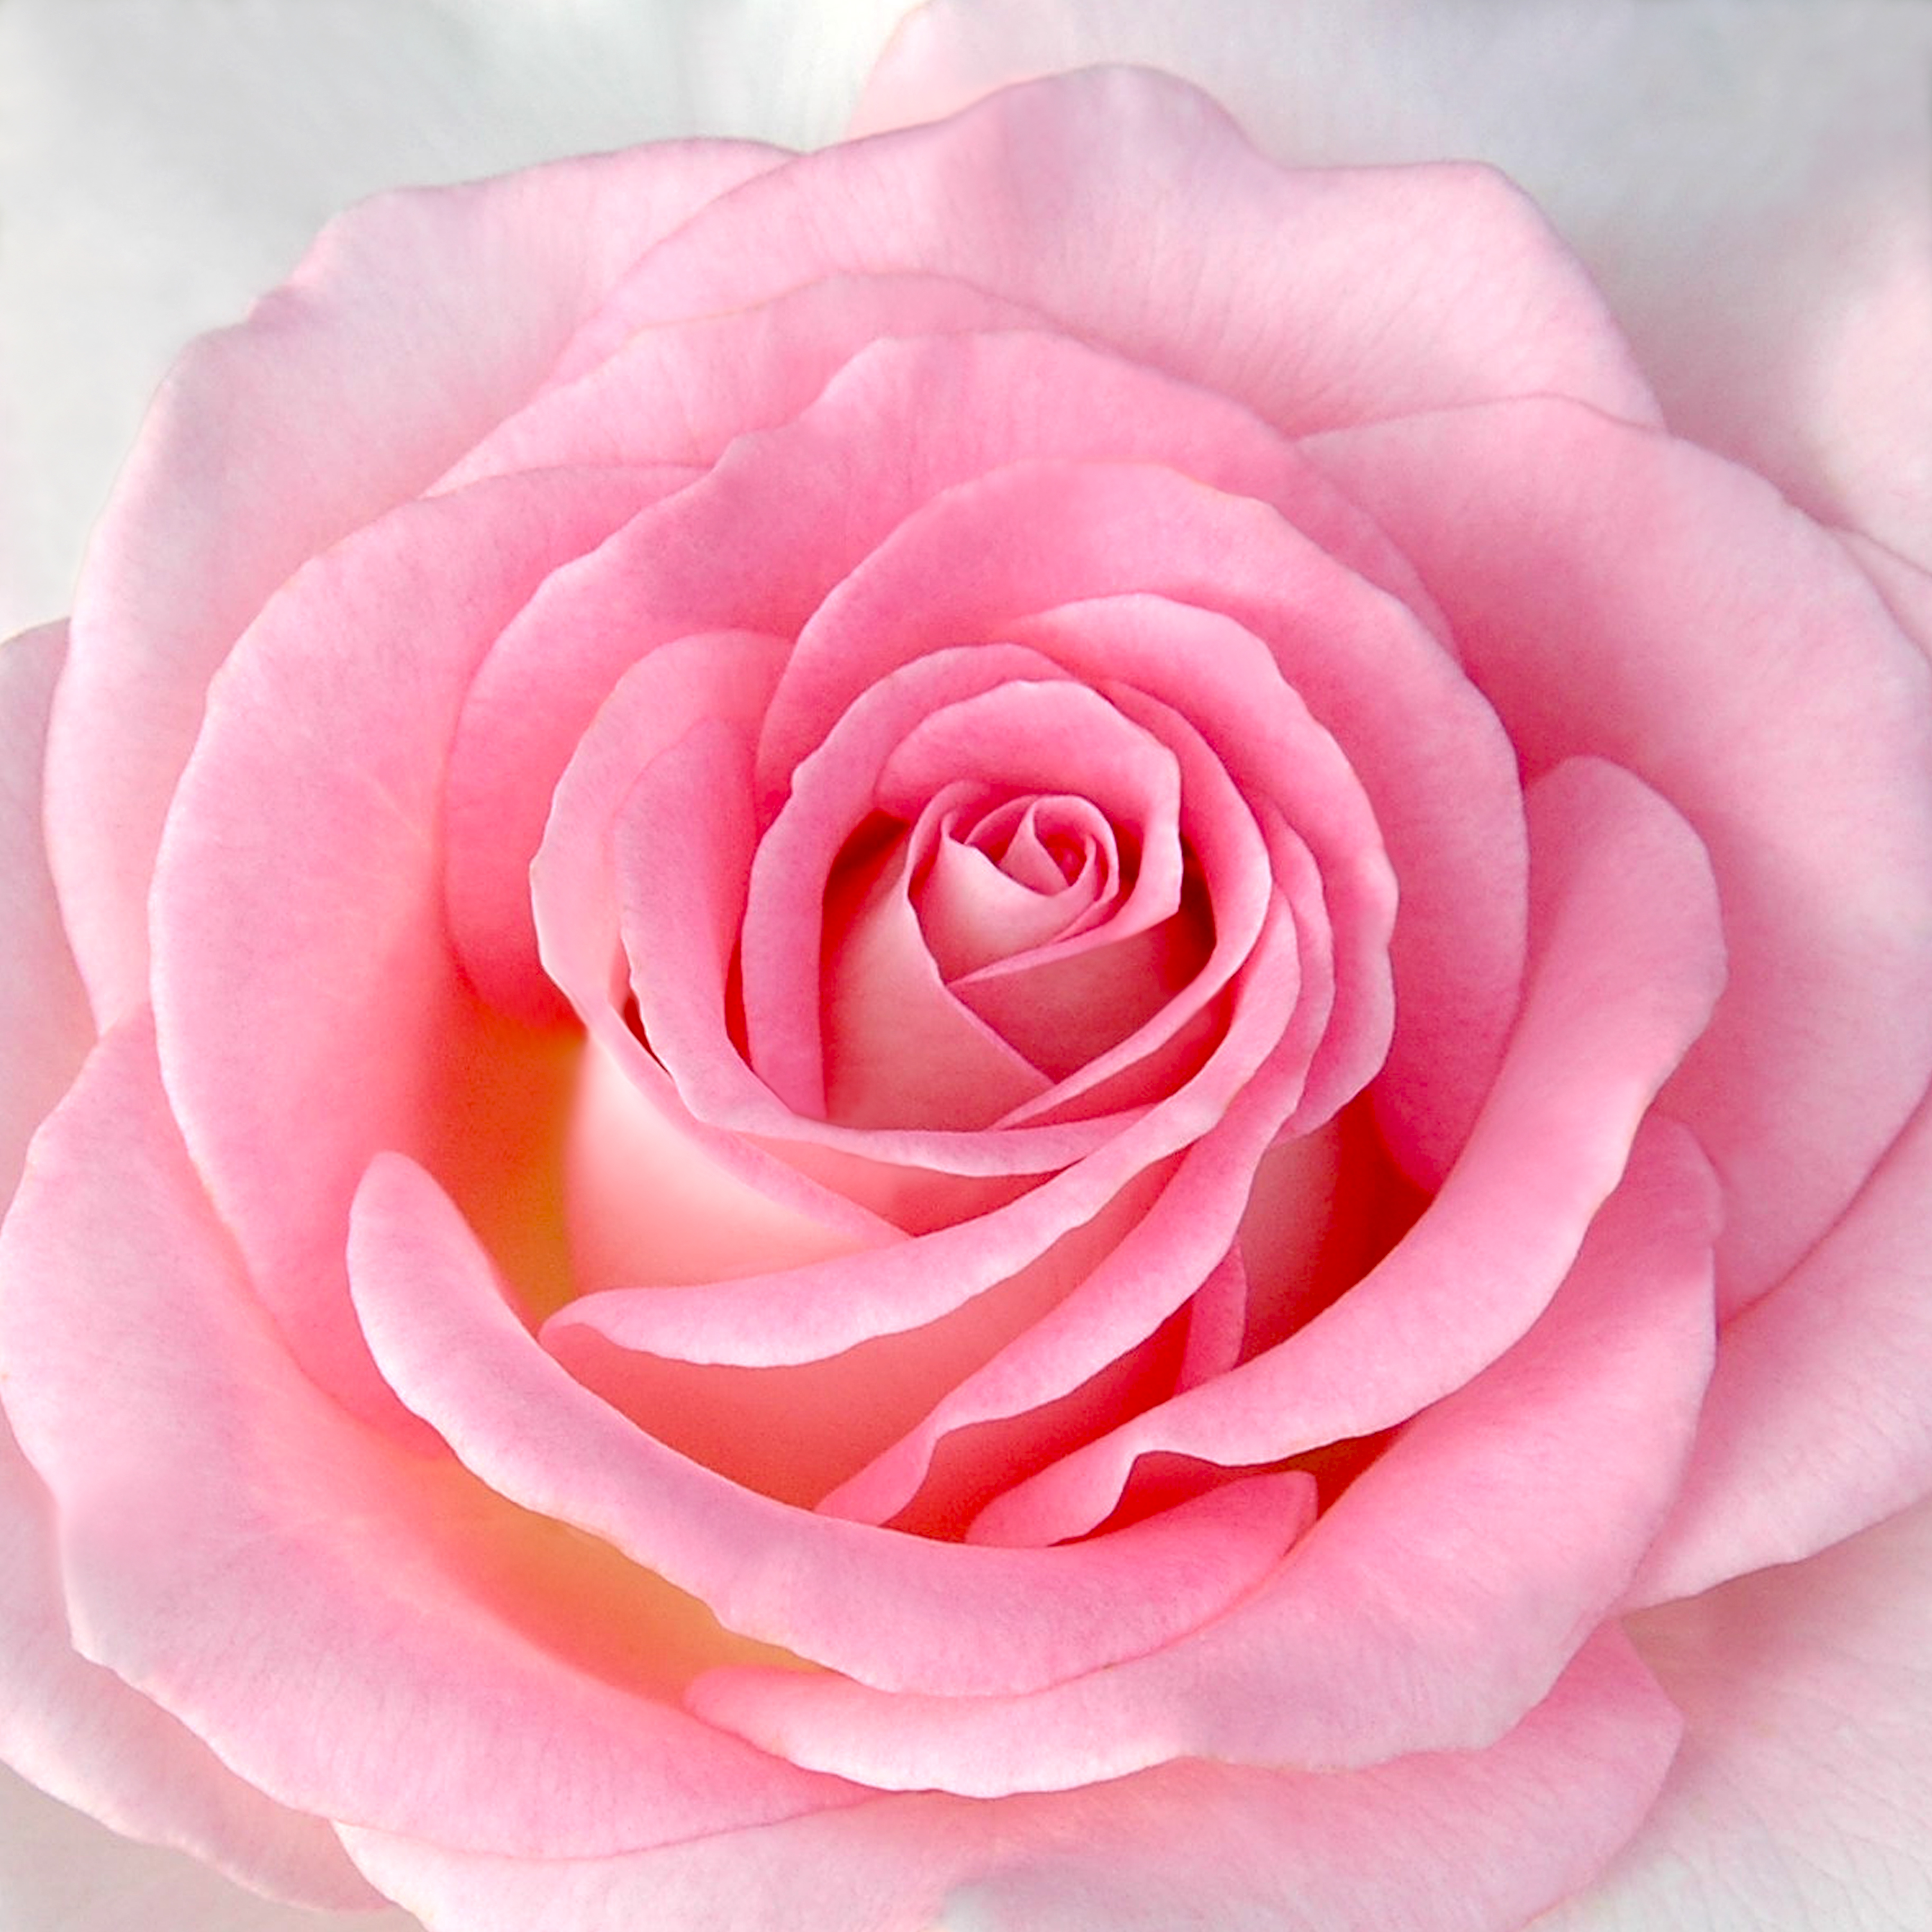 A Dozen Rose from my Garden: Falling in Love